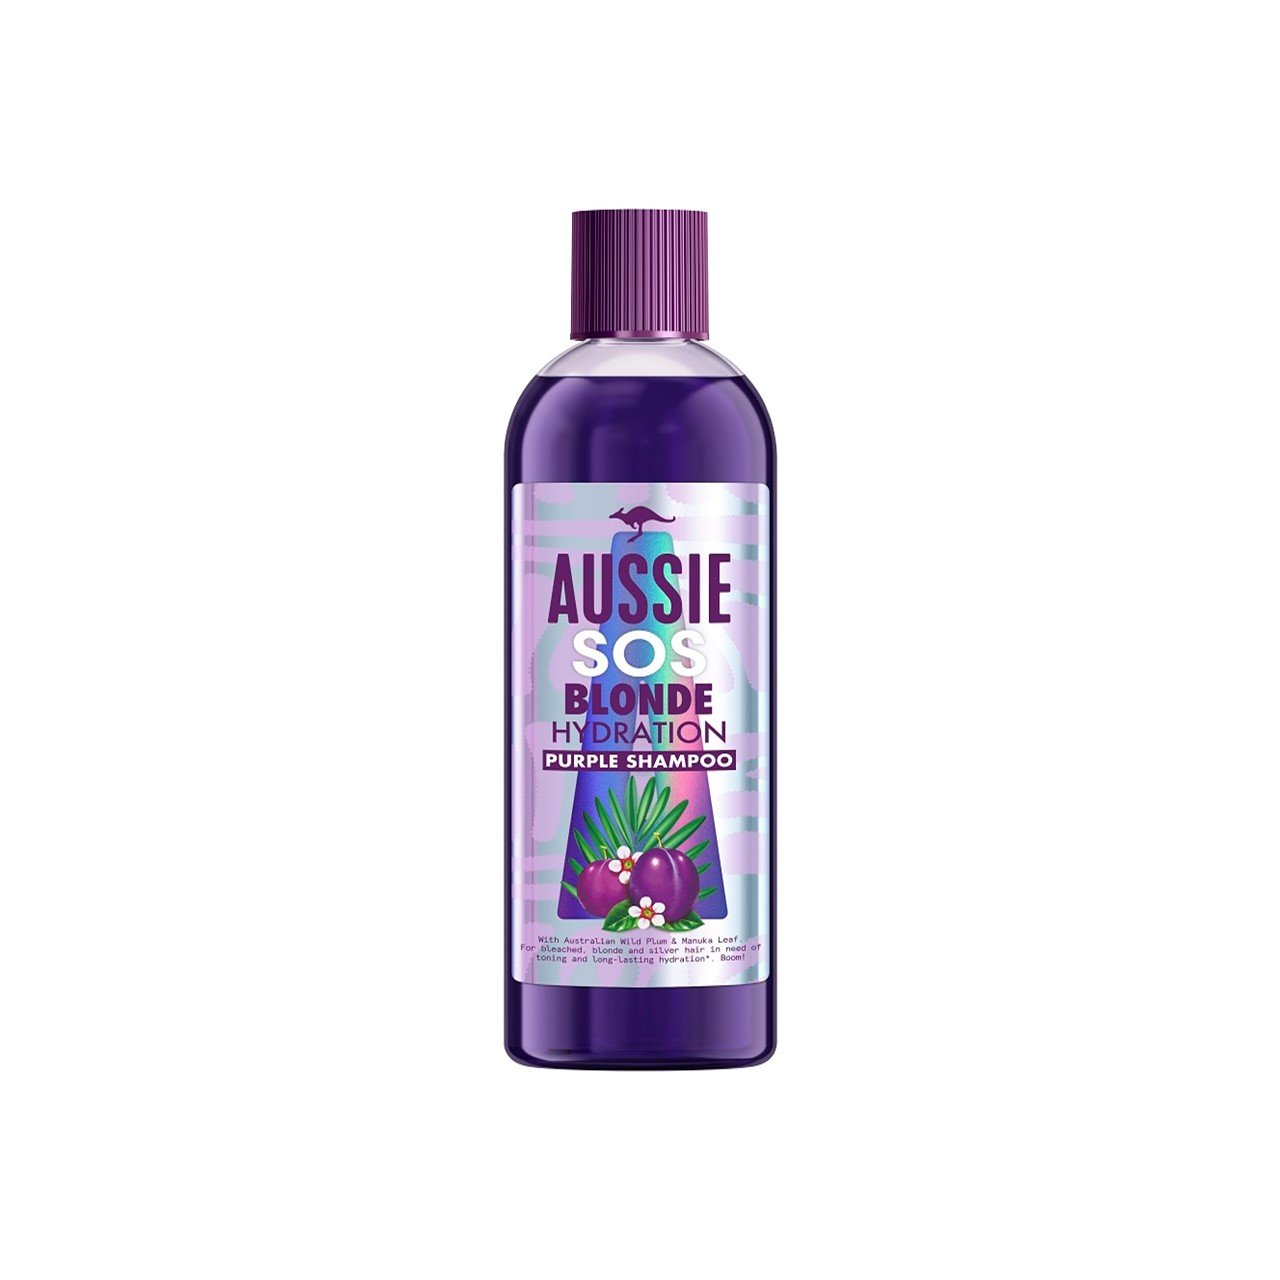 Aussie SOS Blonde Hydration Purple Shampoo 290ml (9.81fl oz)